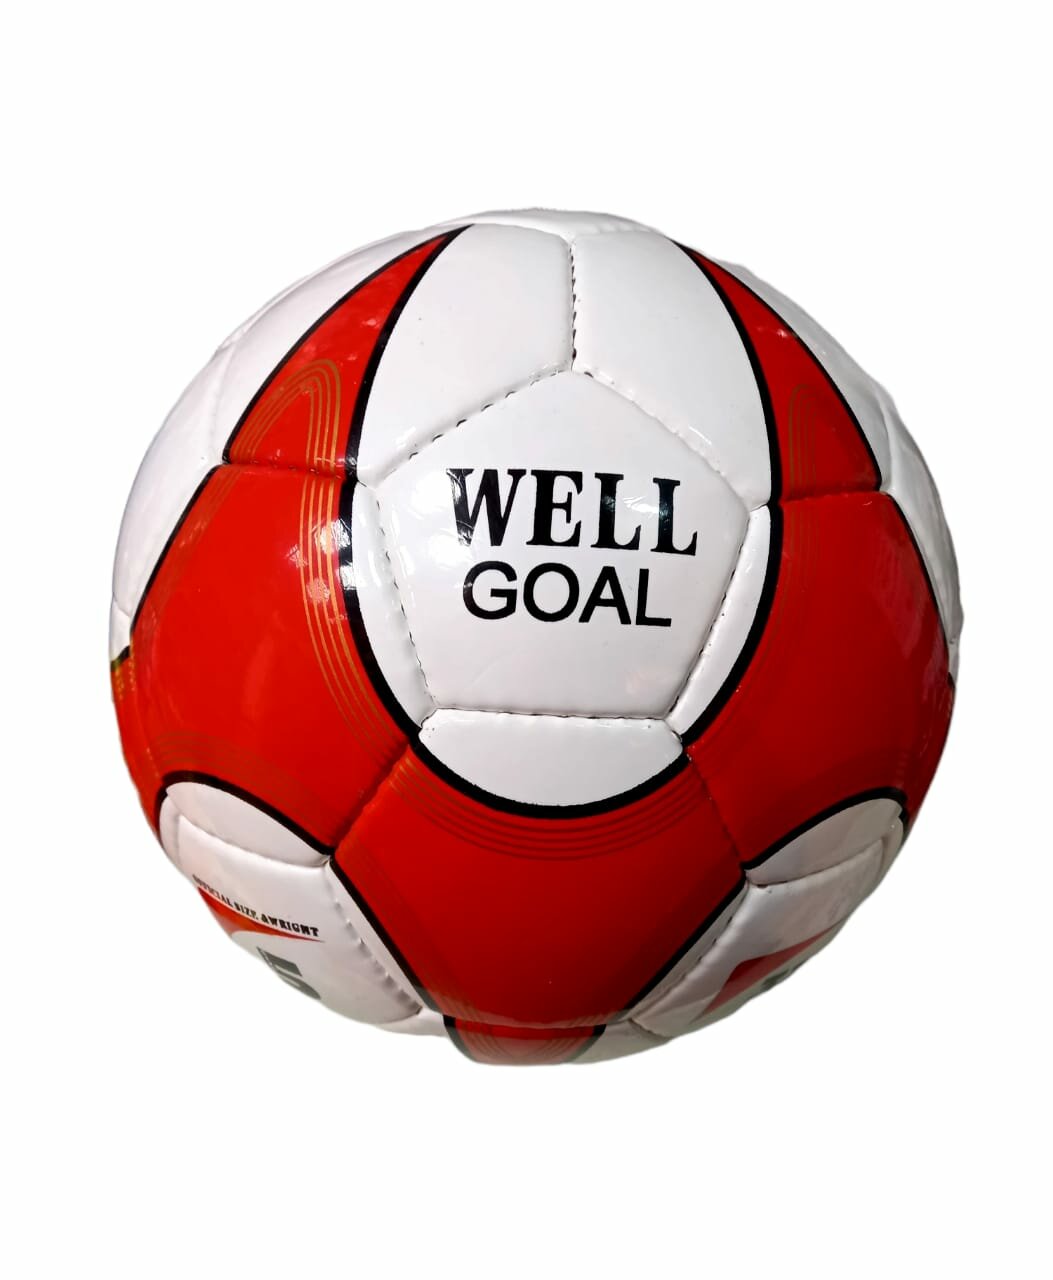 Well Goal Футбольный мяч G14